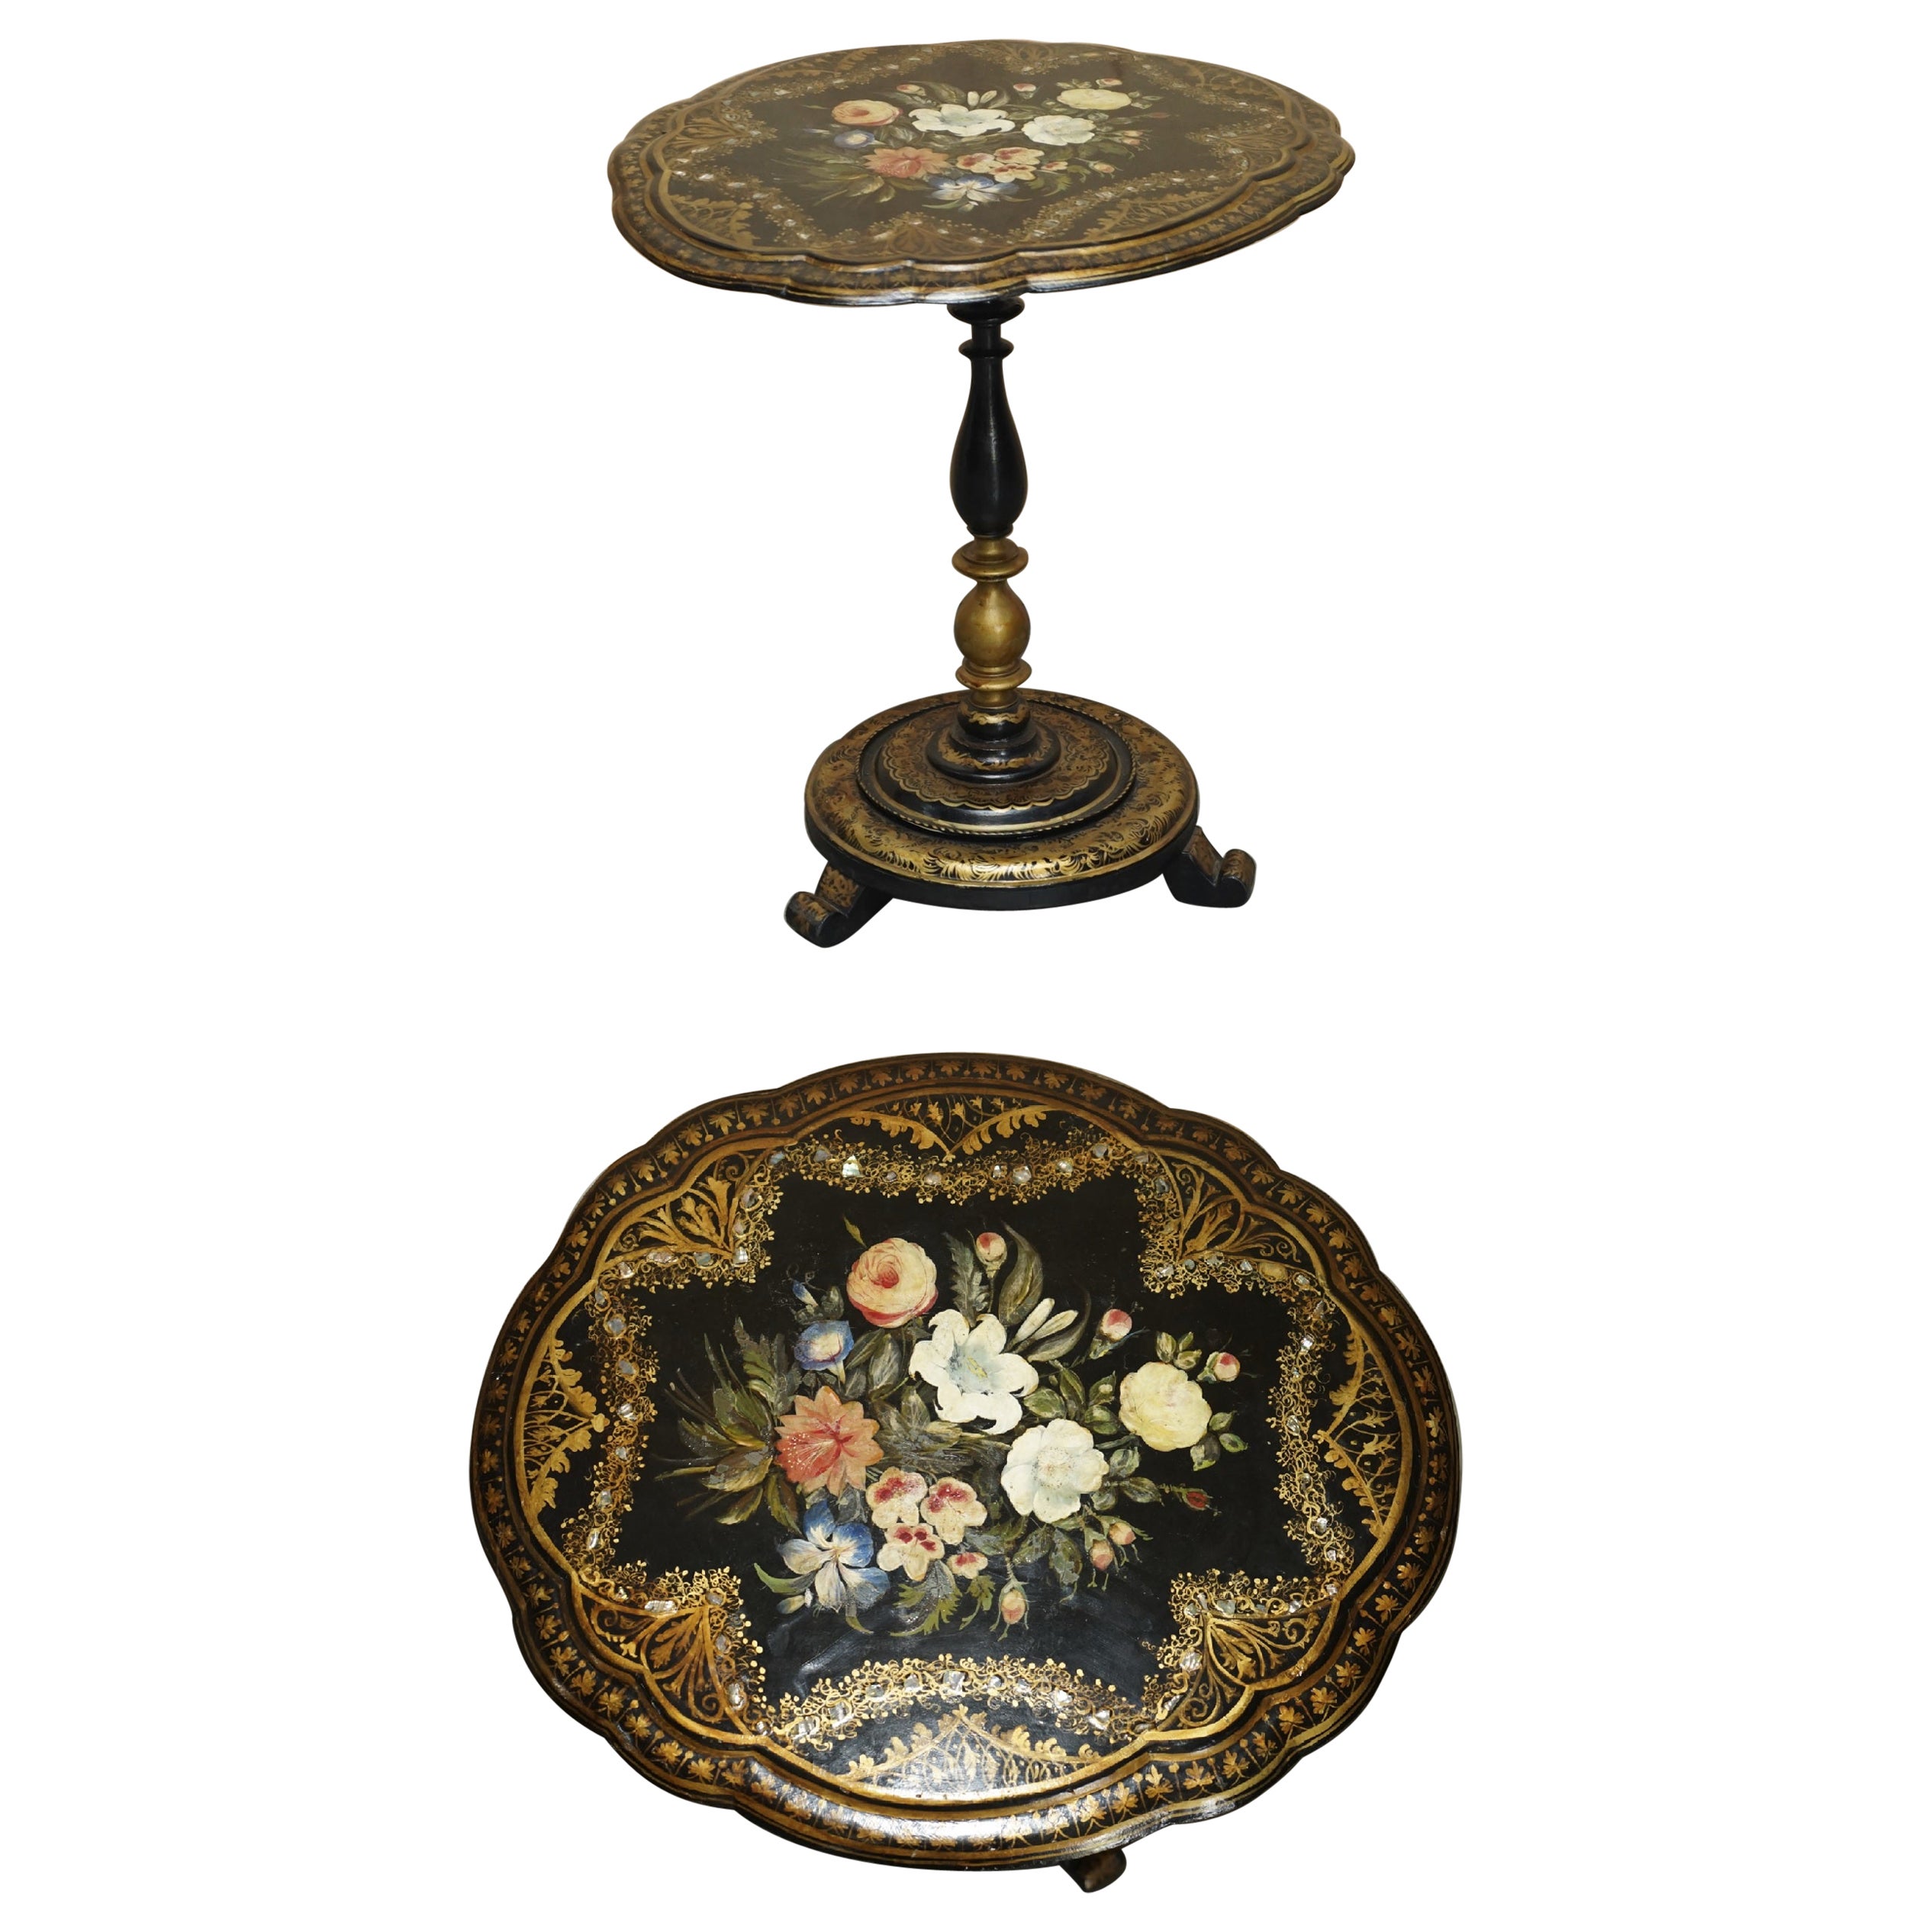 Table d'appoint exquise de la Régence antique 1810 LACQUERED MOTHER OF PEARL INLAID TiLT OP TABLE